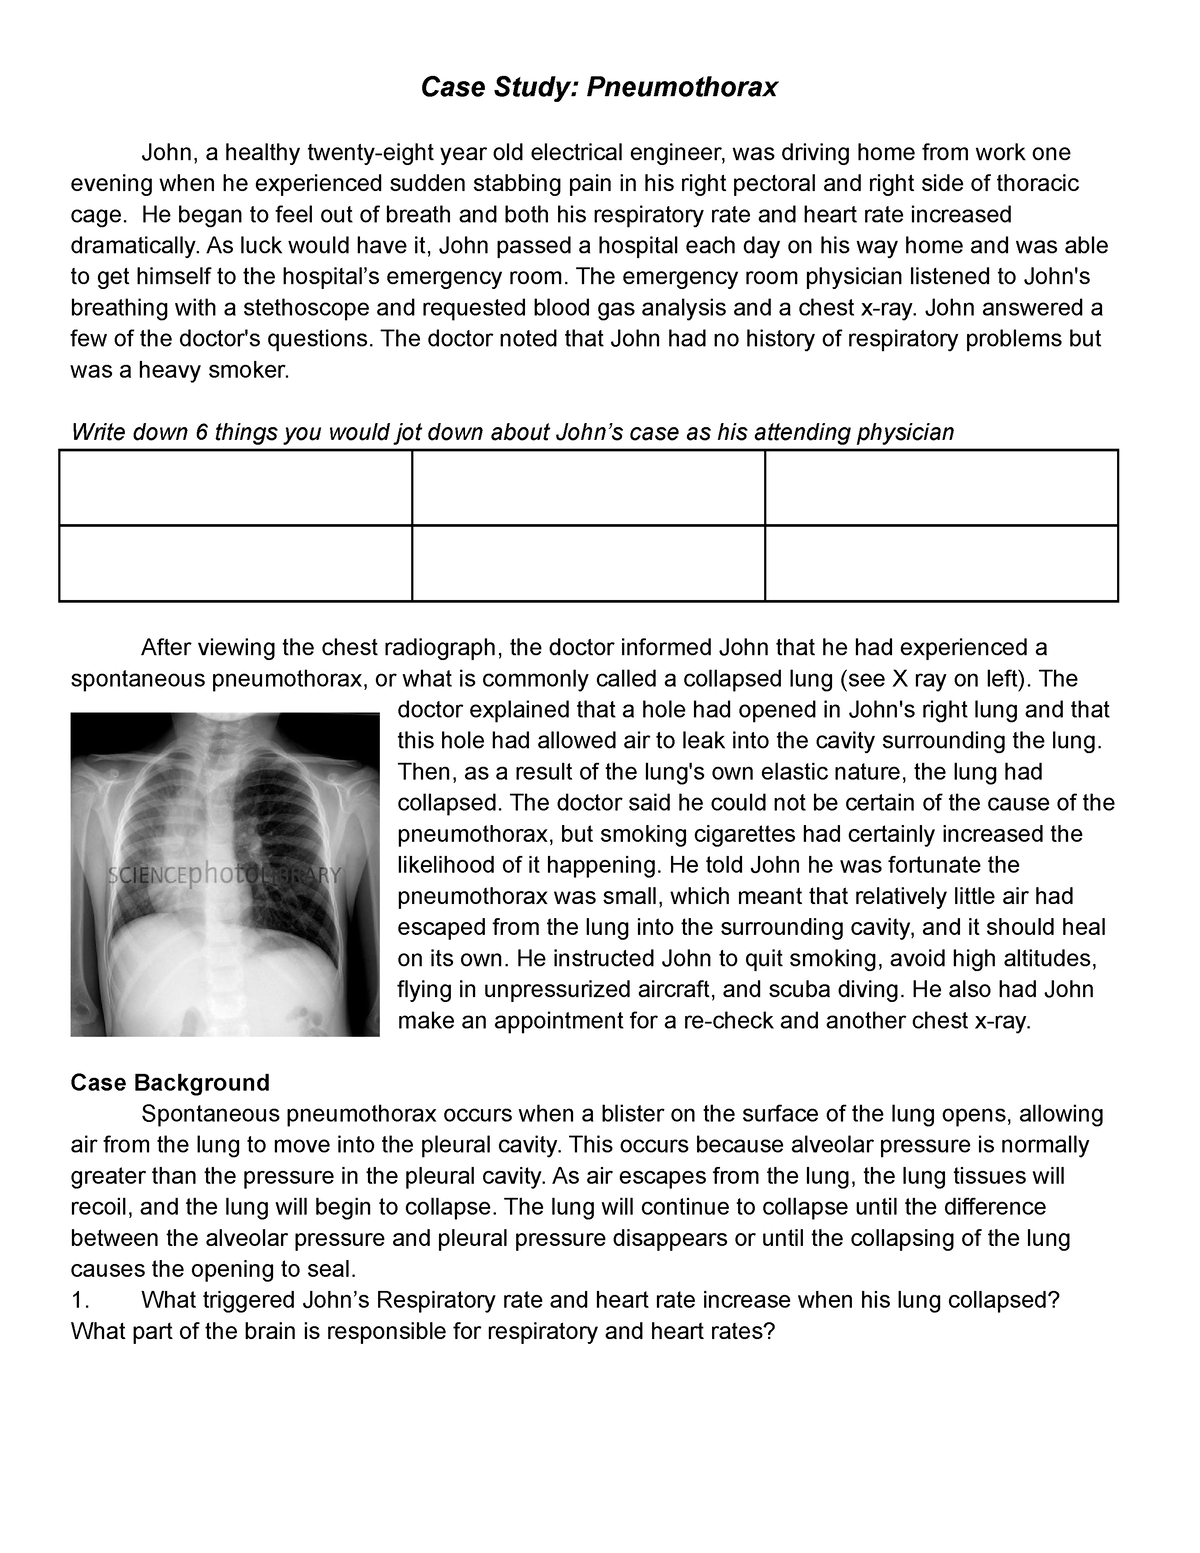 pneumothorax case study scribd